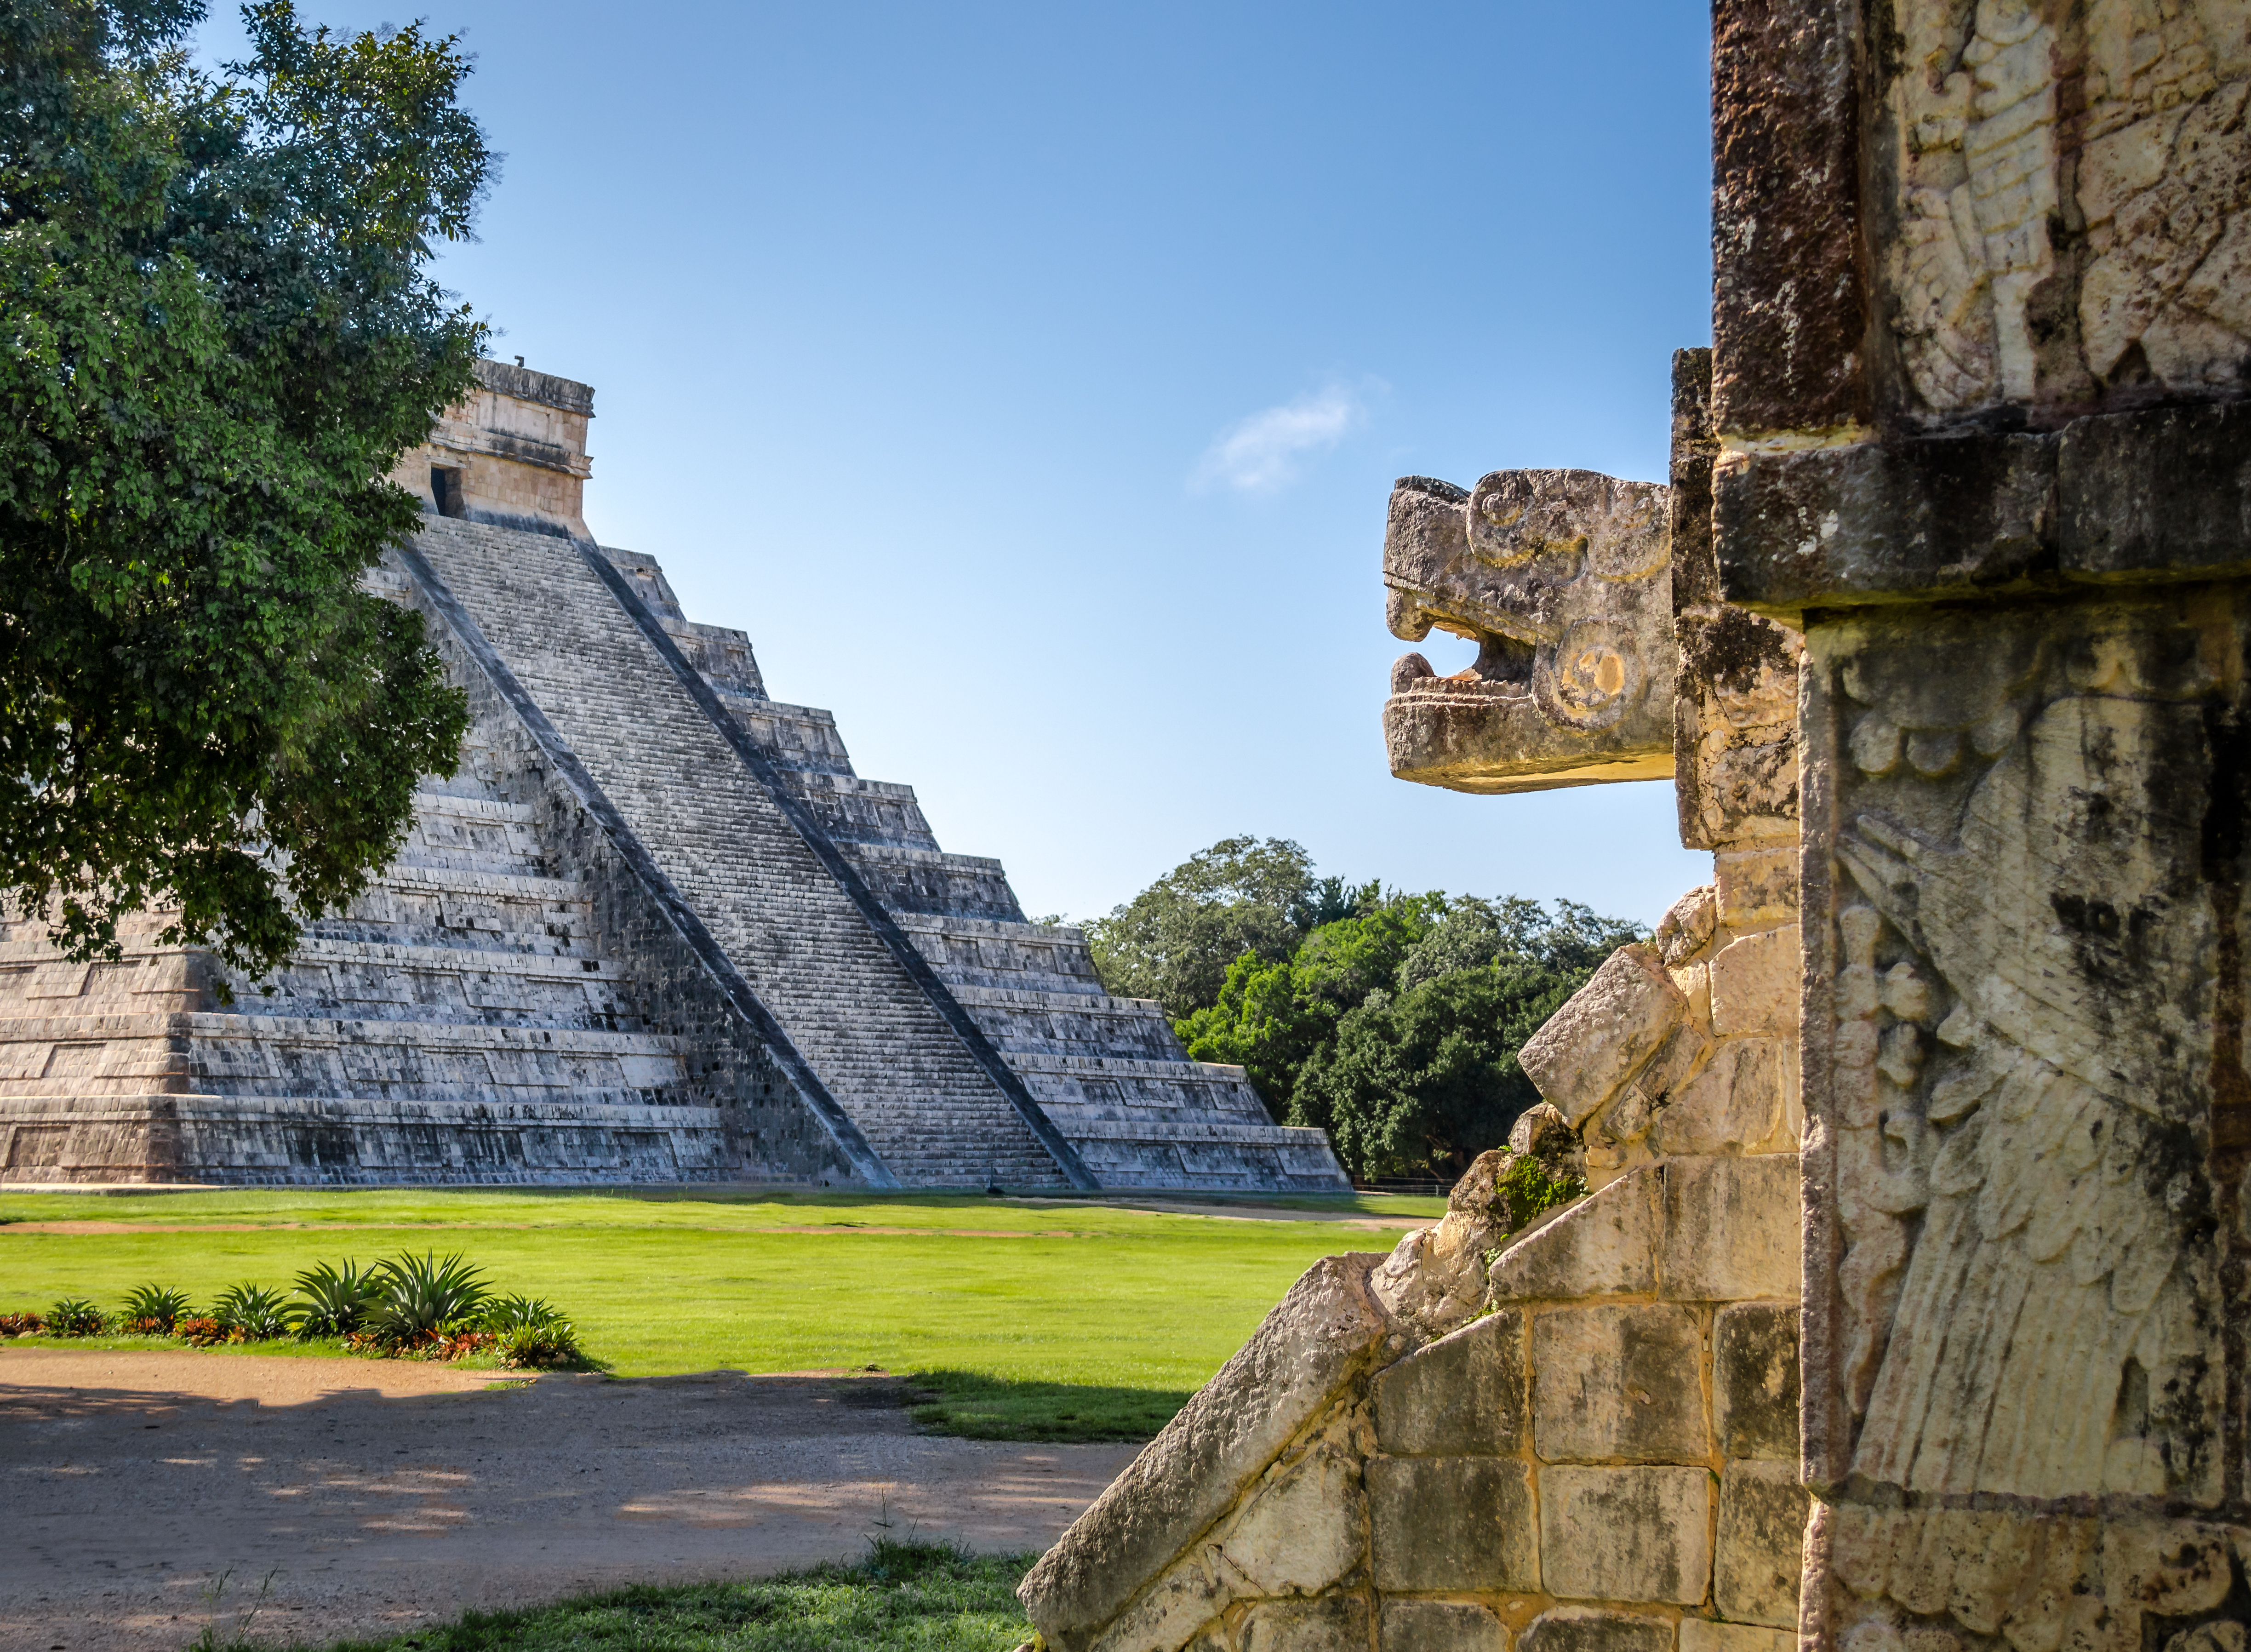 Jaguar head and Mayan temple pyramid of Kukulkan in Chichen Itza, Yucatan, Mexico. Image Credit: Diego Grandi, Envato Creative Commons.